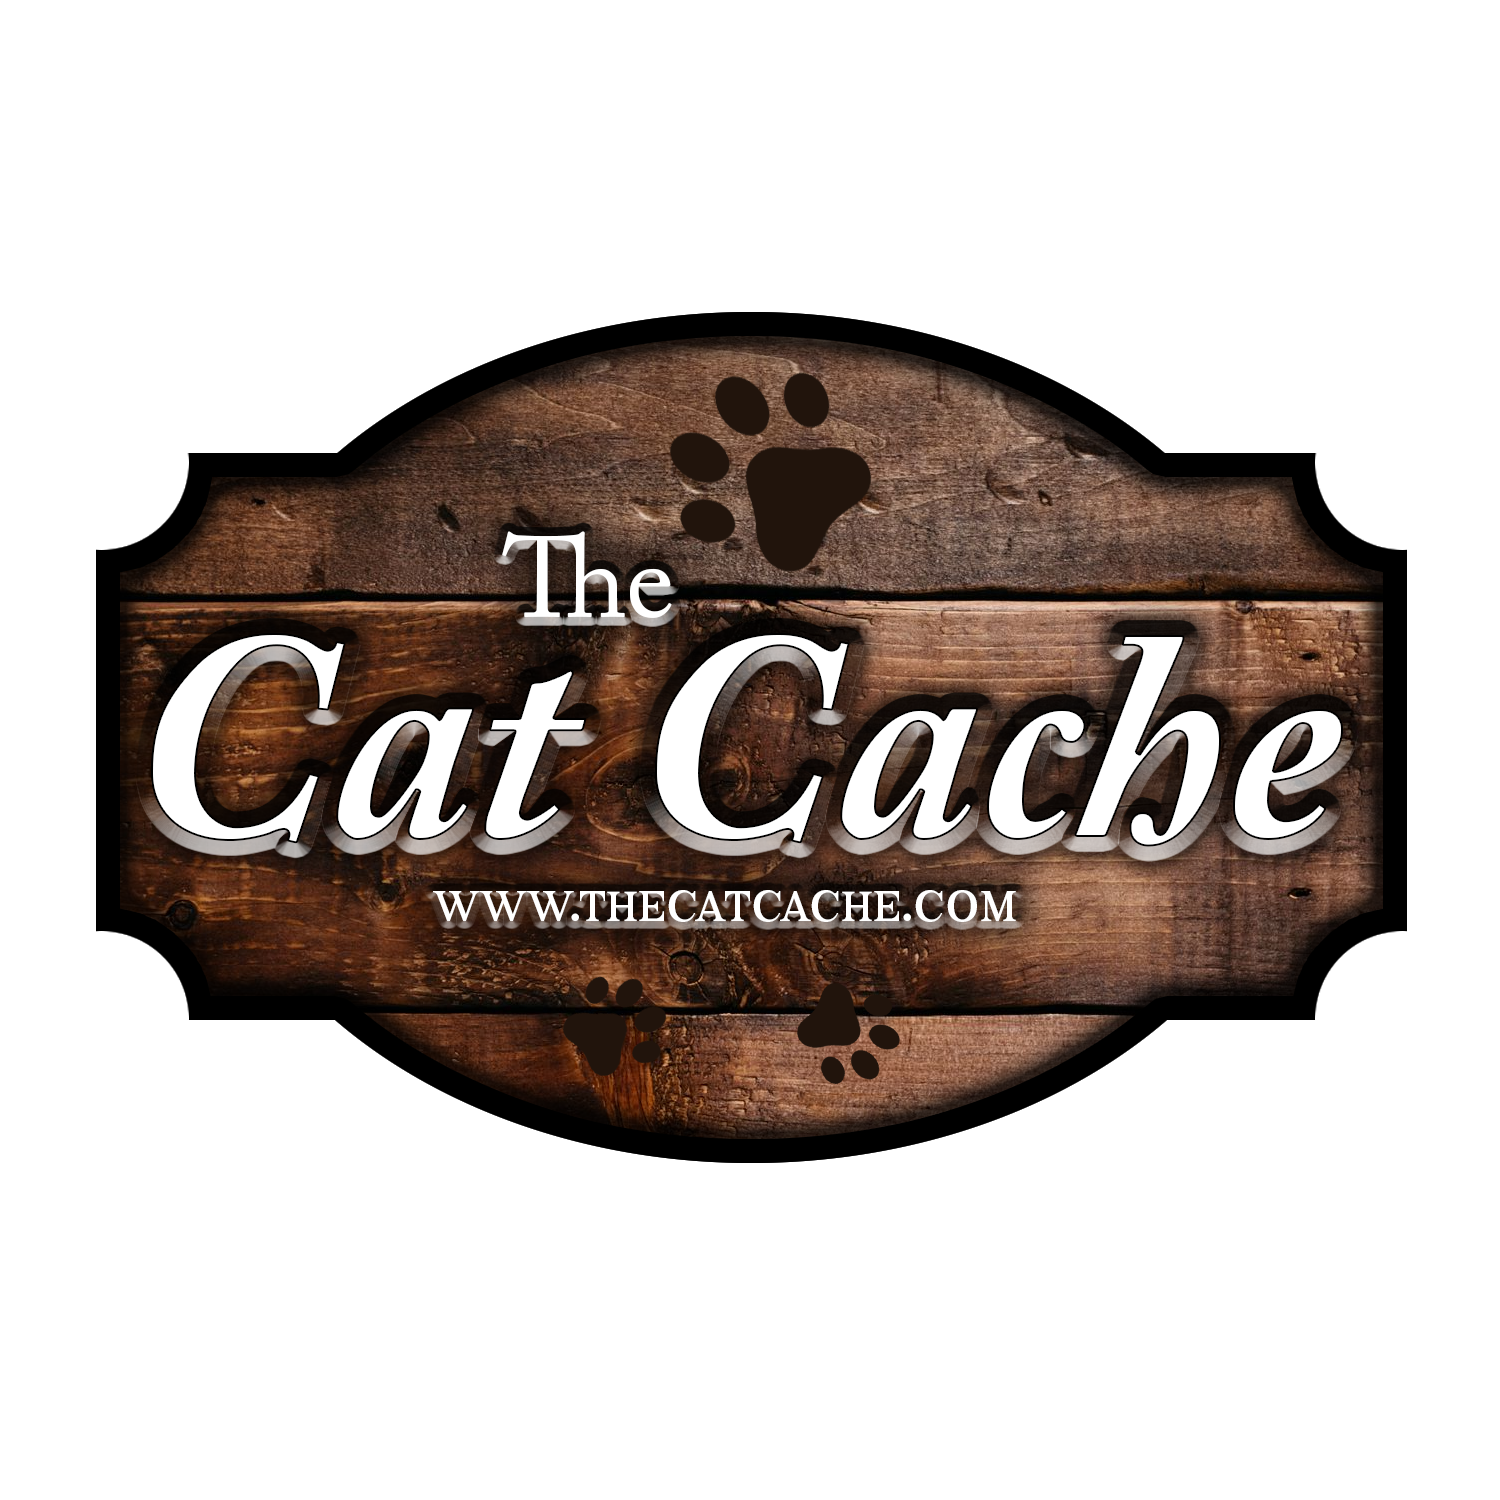 The Cat Cache